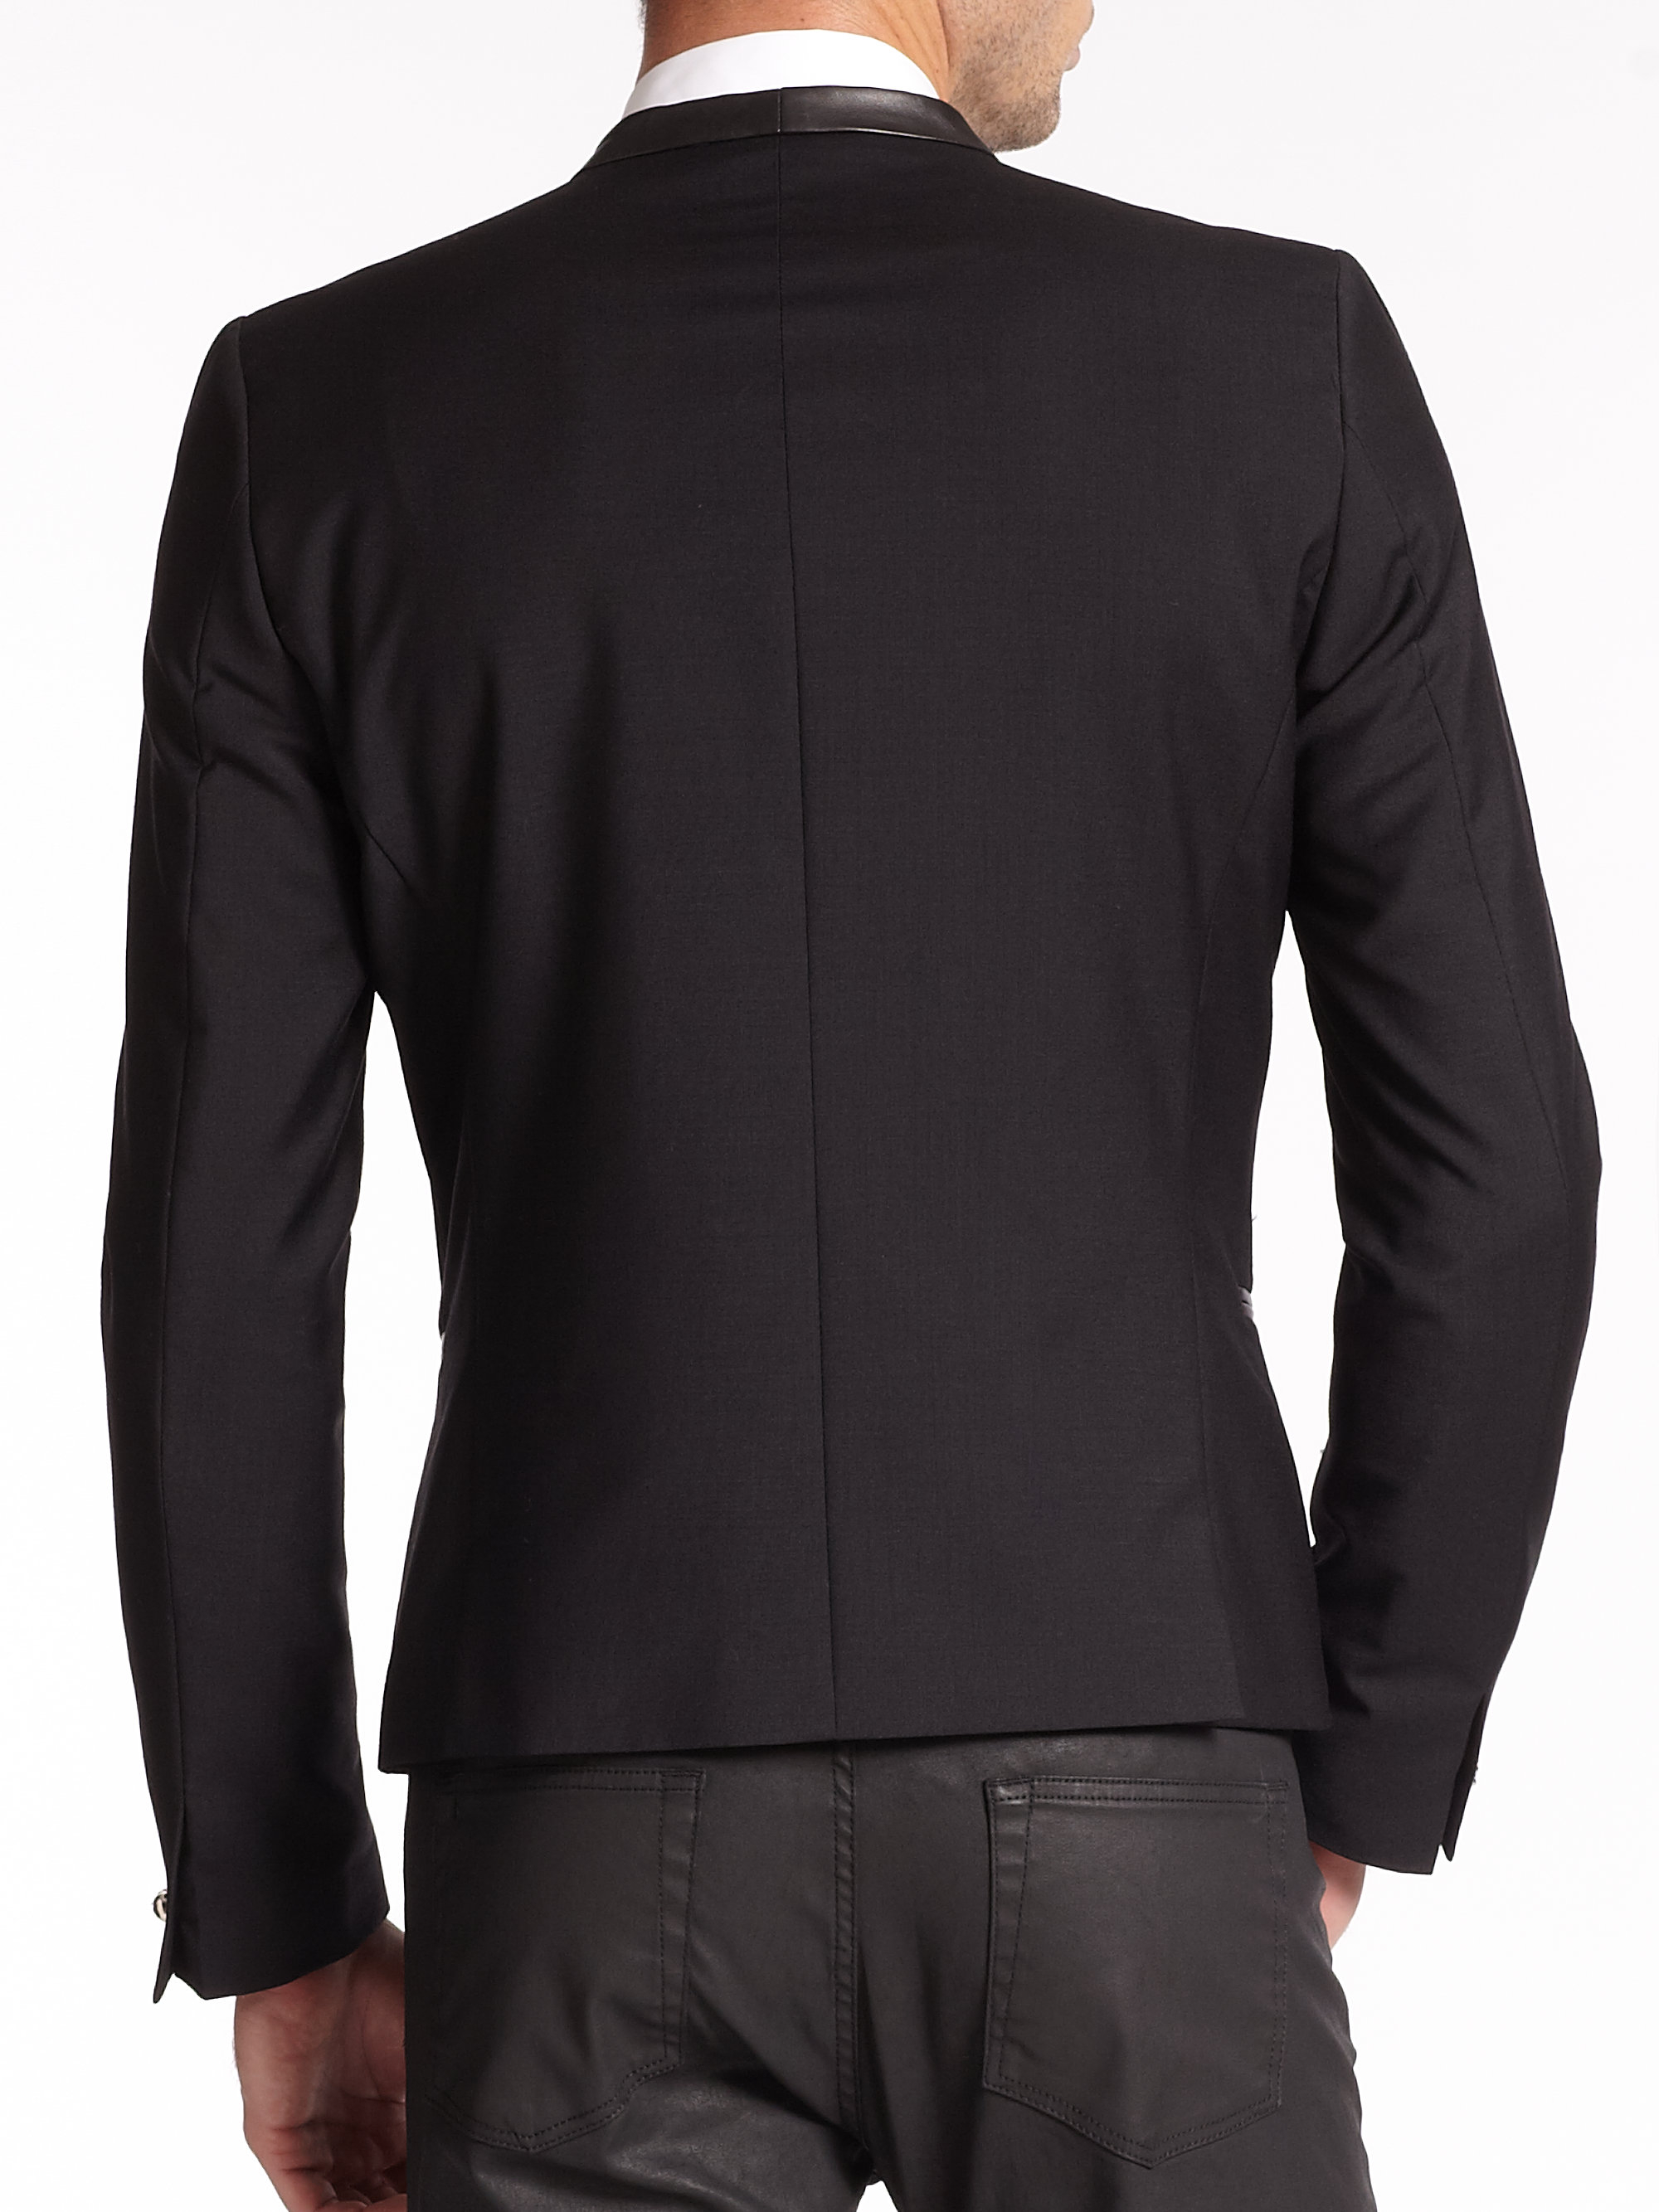 The Kooples Wool, Mohair & Leather Blazer in Black for Men - Lyst